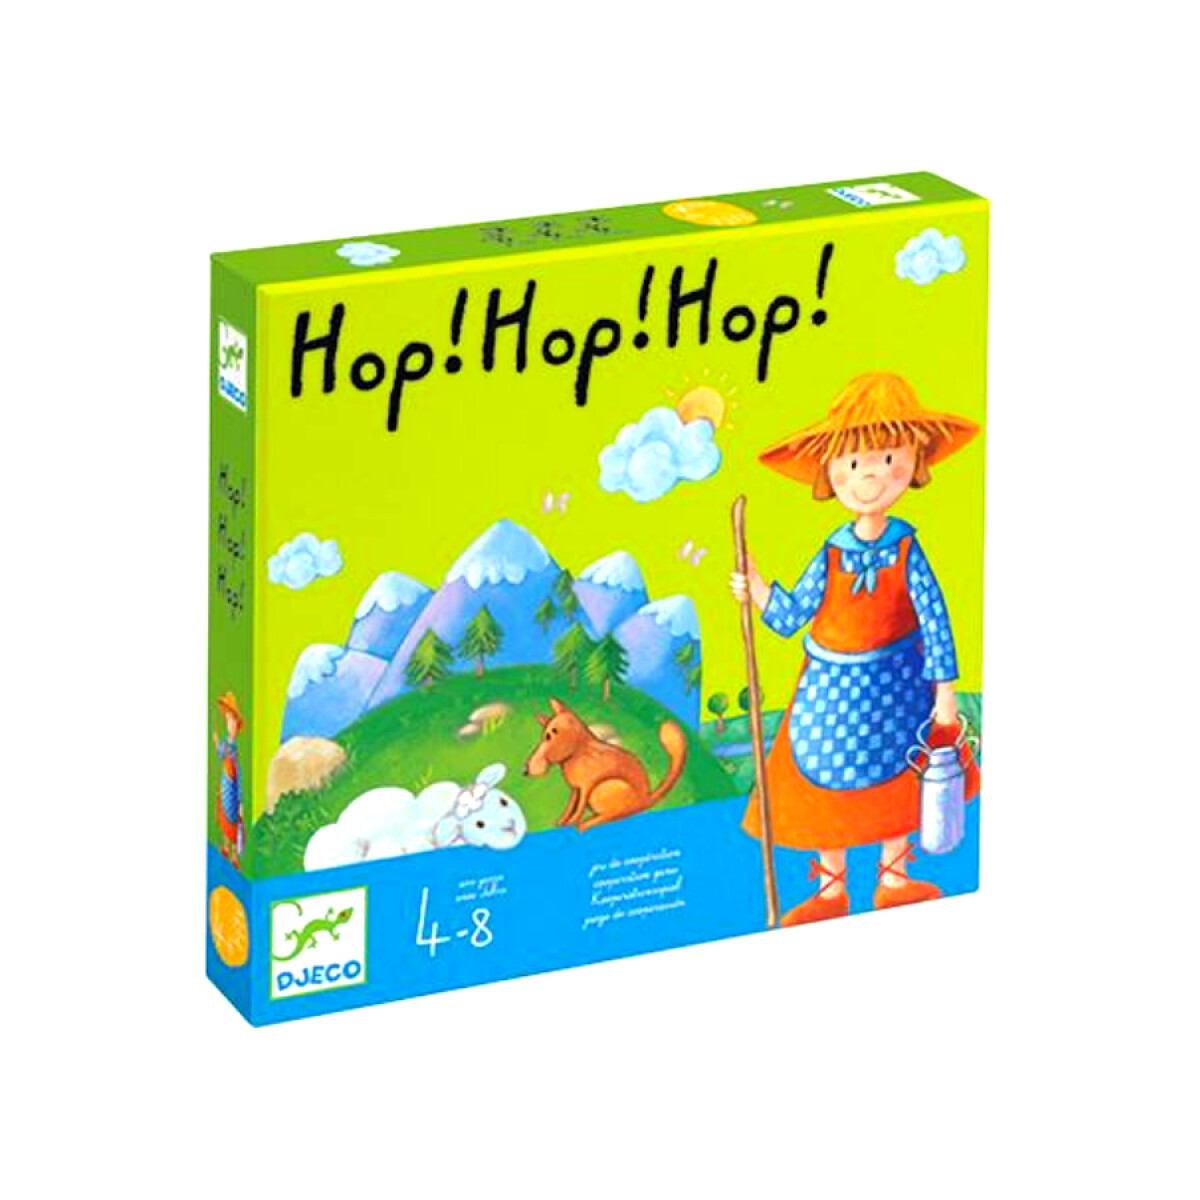 Hop! Hop! Hop! by Djeco 